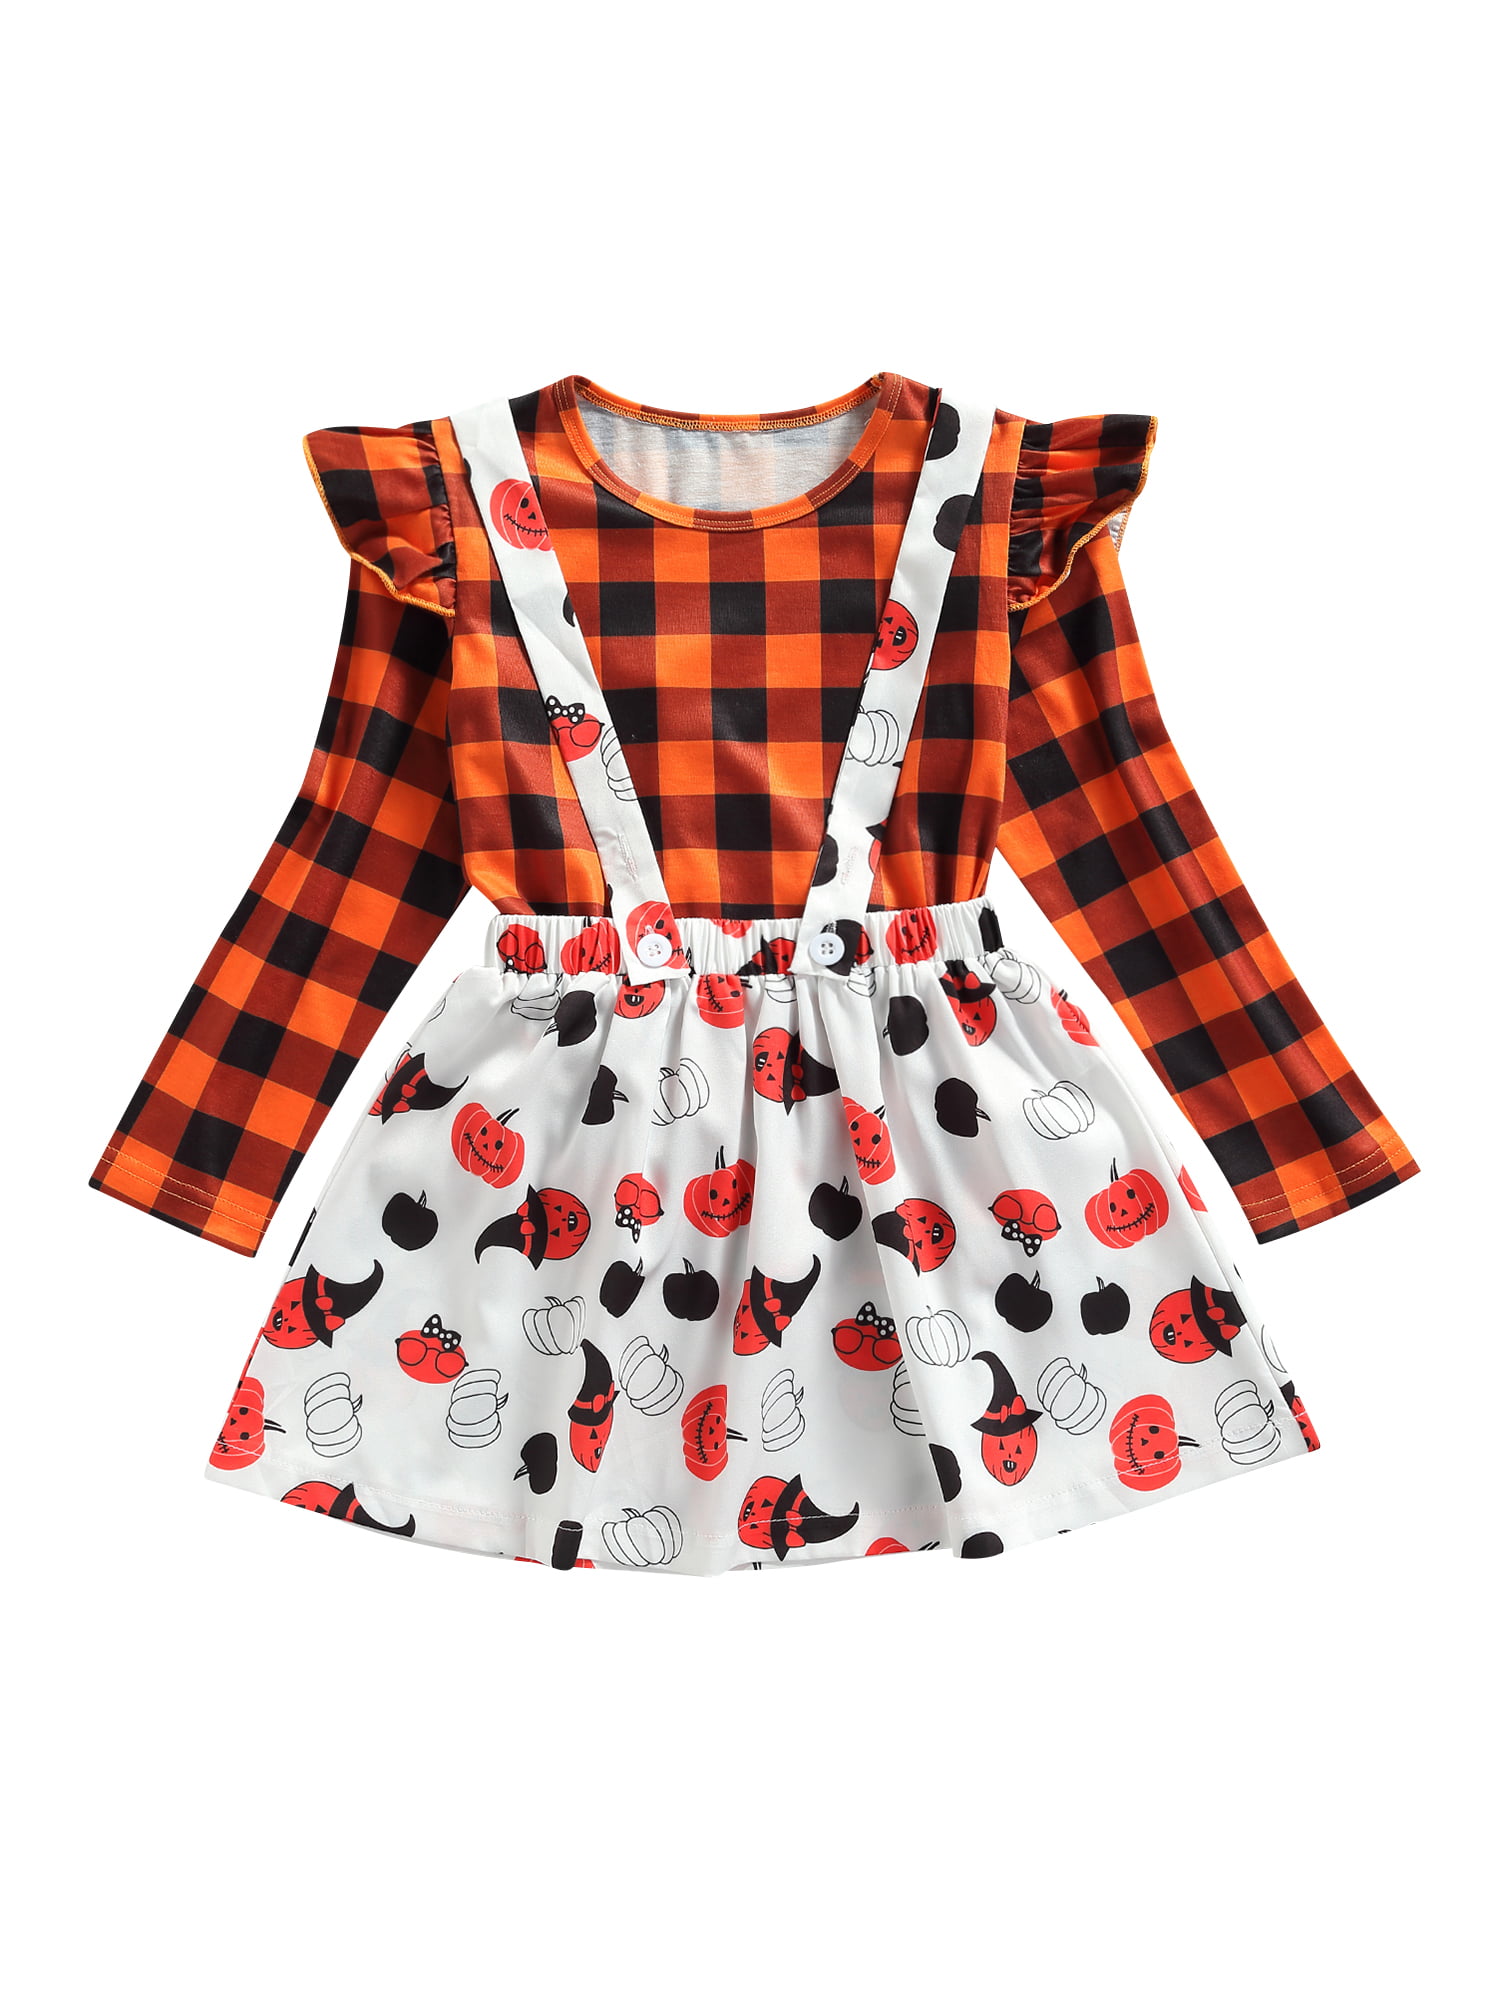 Xshuai Baby Clothes Set Toddler Baby Kids Girls Halloween Plaid Tops Pumpkin Skirts Set Outfits